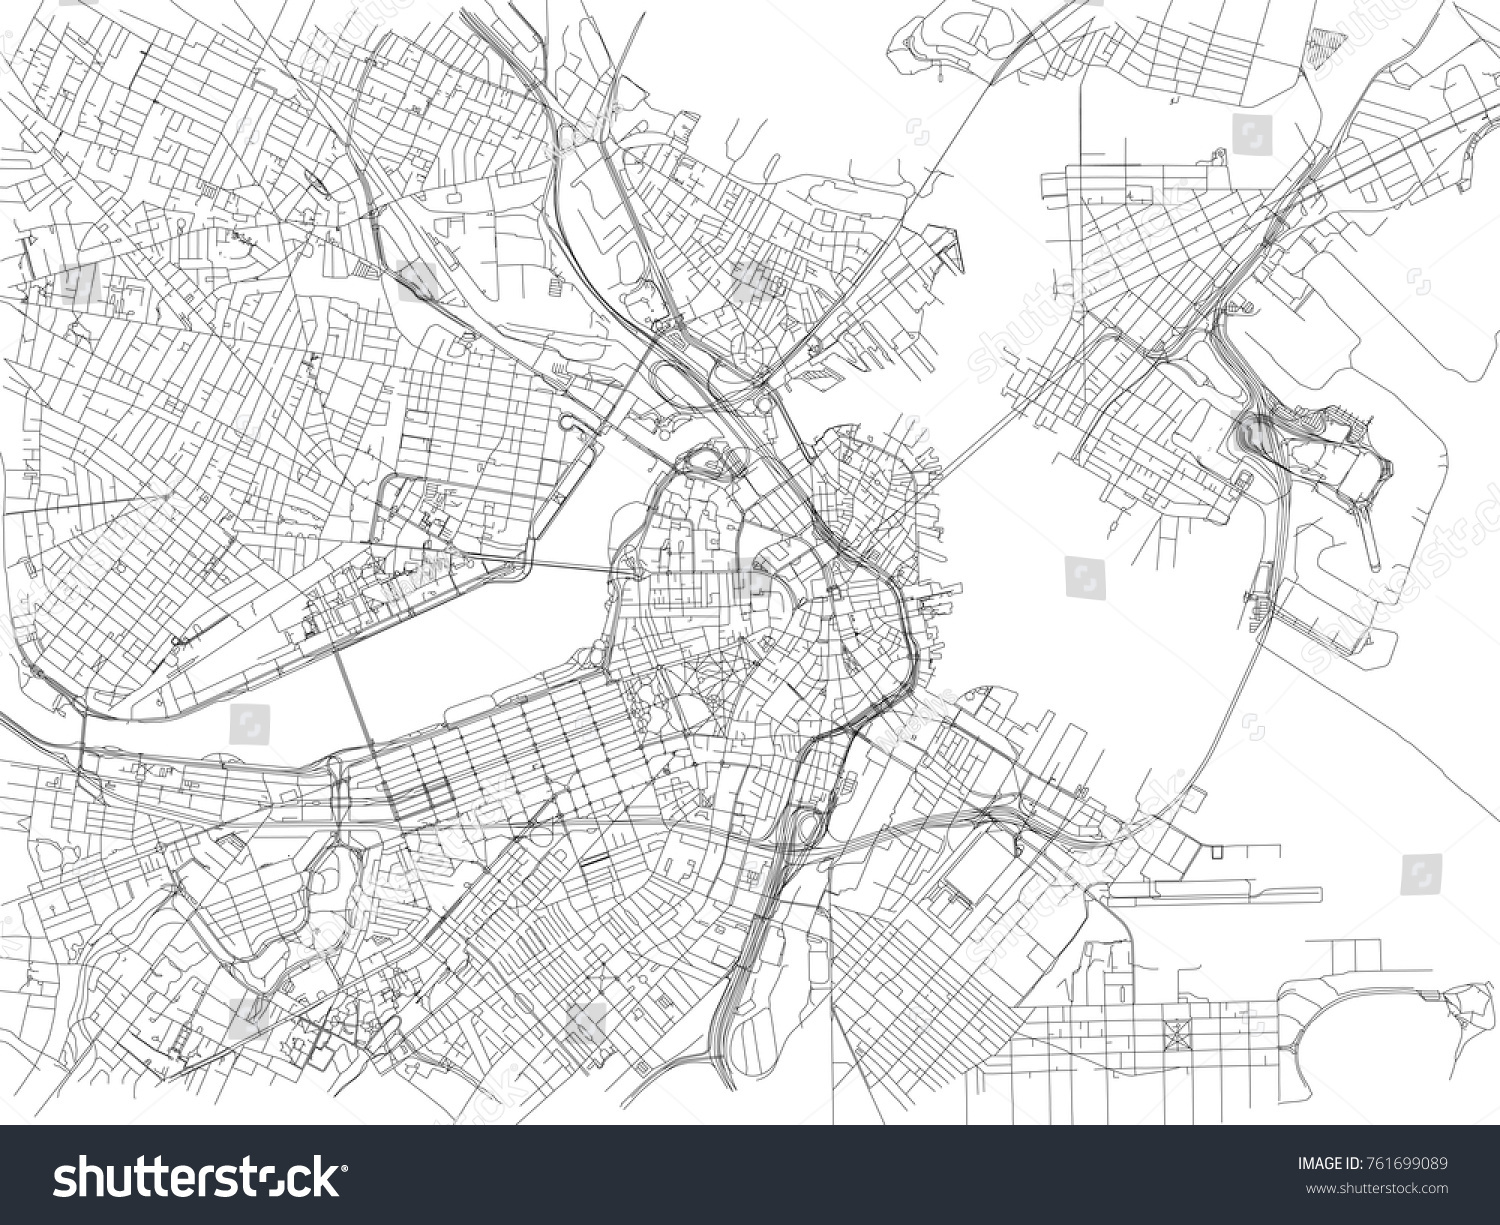 SVG of Streets of Boston, city map, Massachusetts, United States. Street map svg